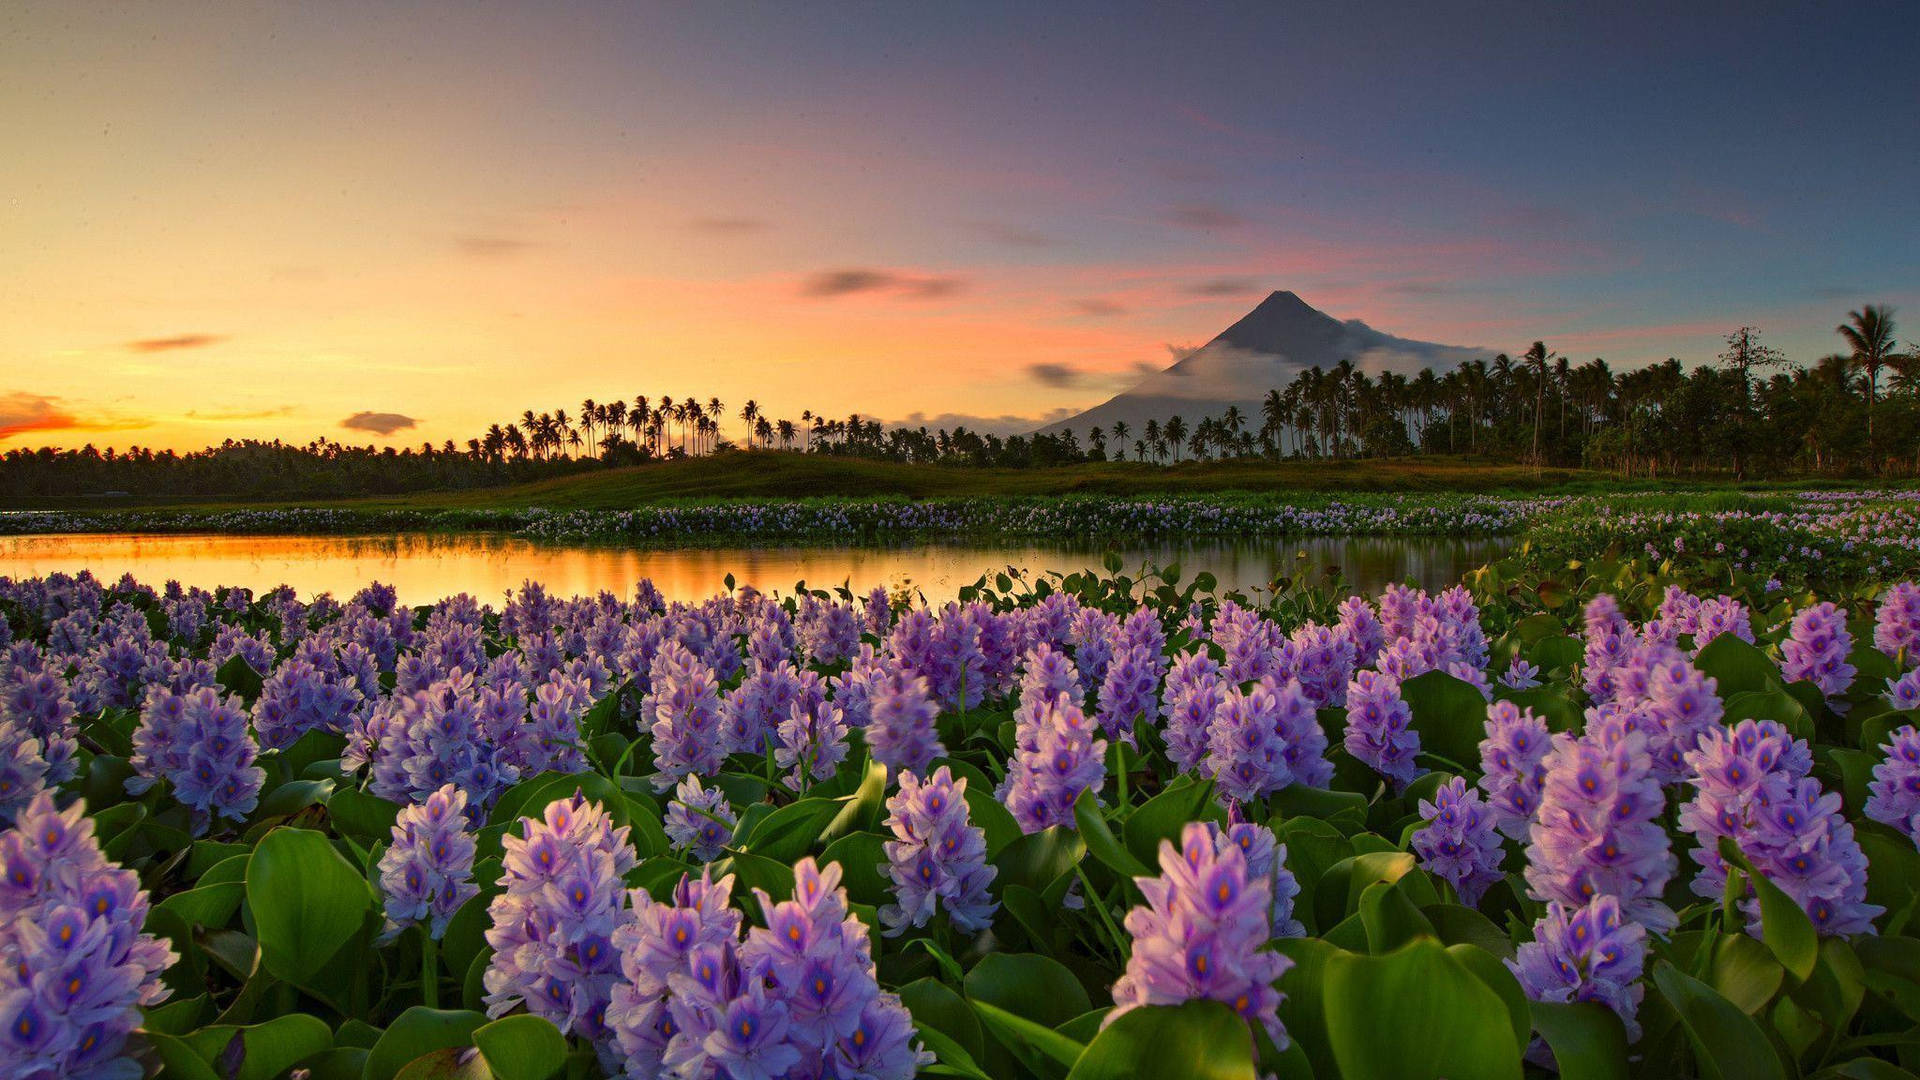 Legazpi City Albay Philippines At Sunset Background